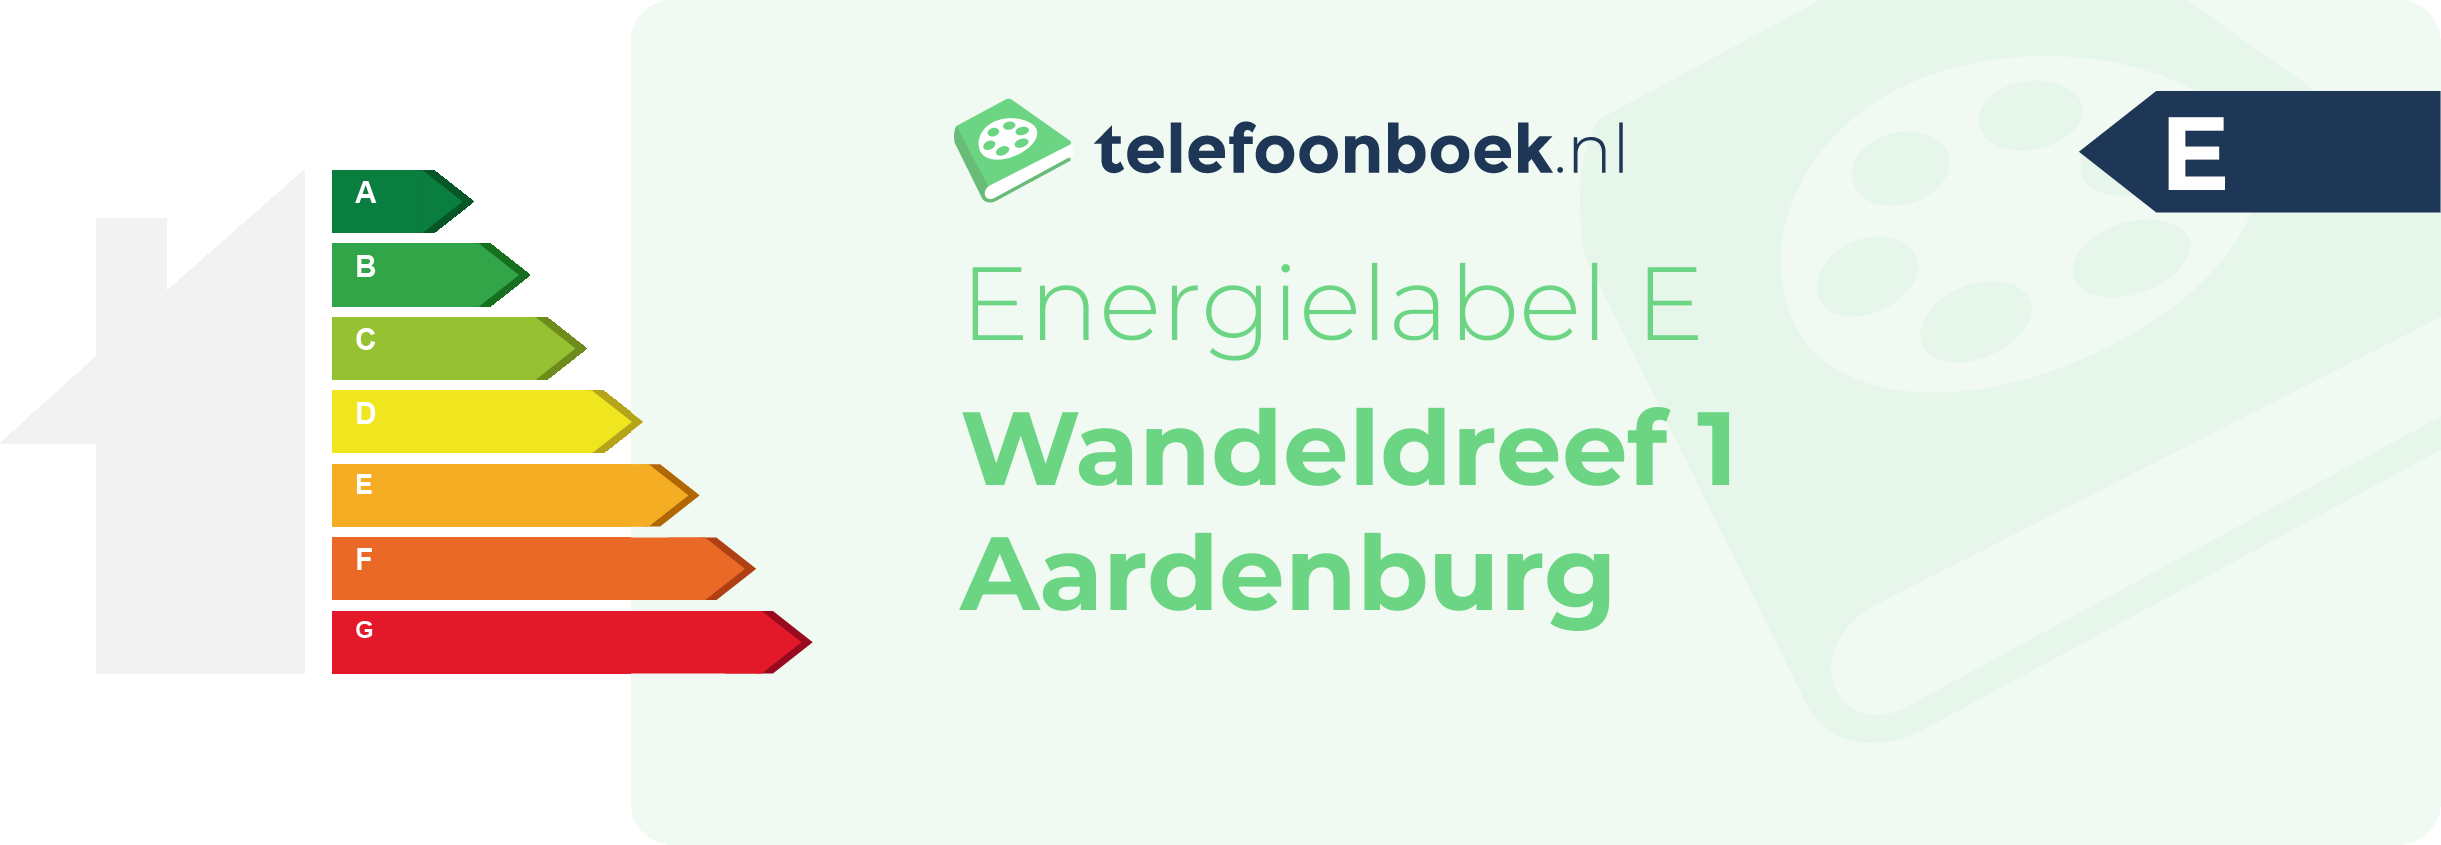 Energielabel Wandeldreef 1 Aardenburg